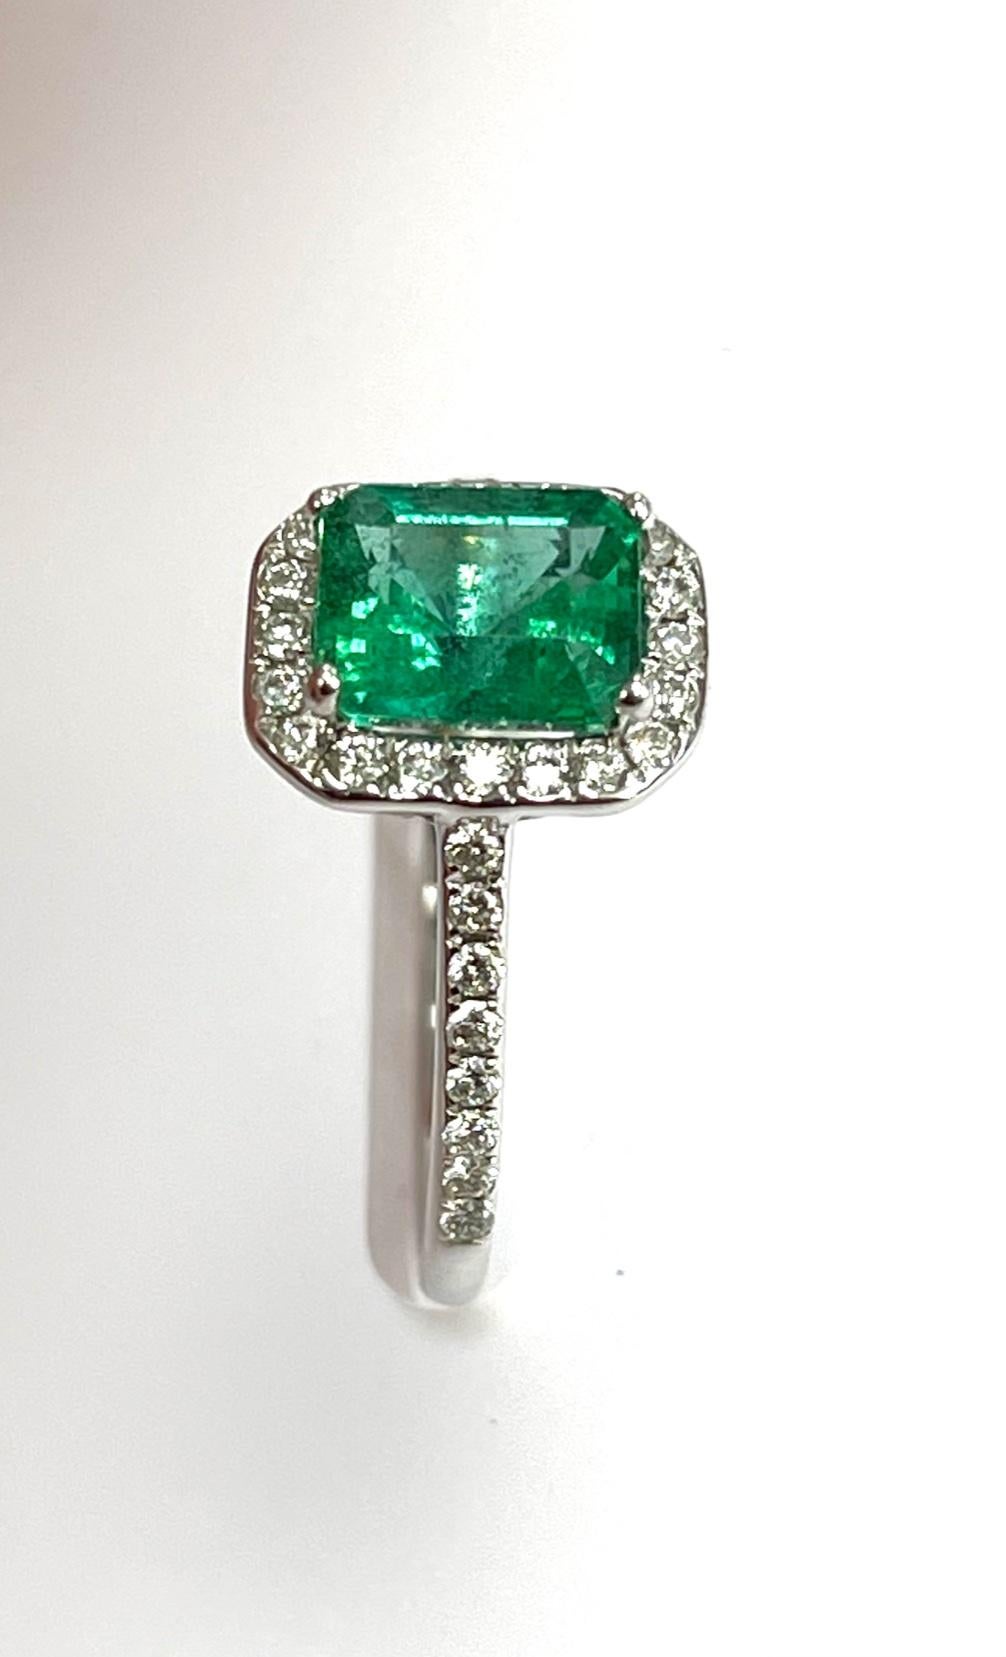 Emerald Cut 1.16 Carat Emerald Diamond Cocktail Ring For Sale